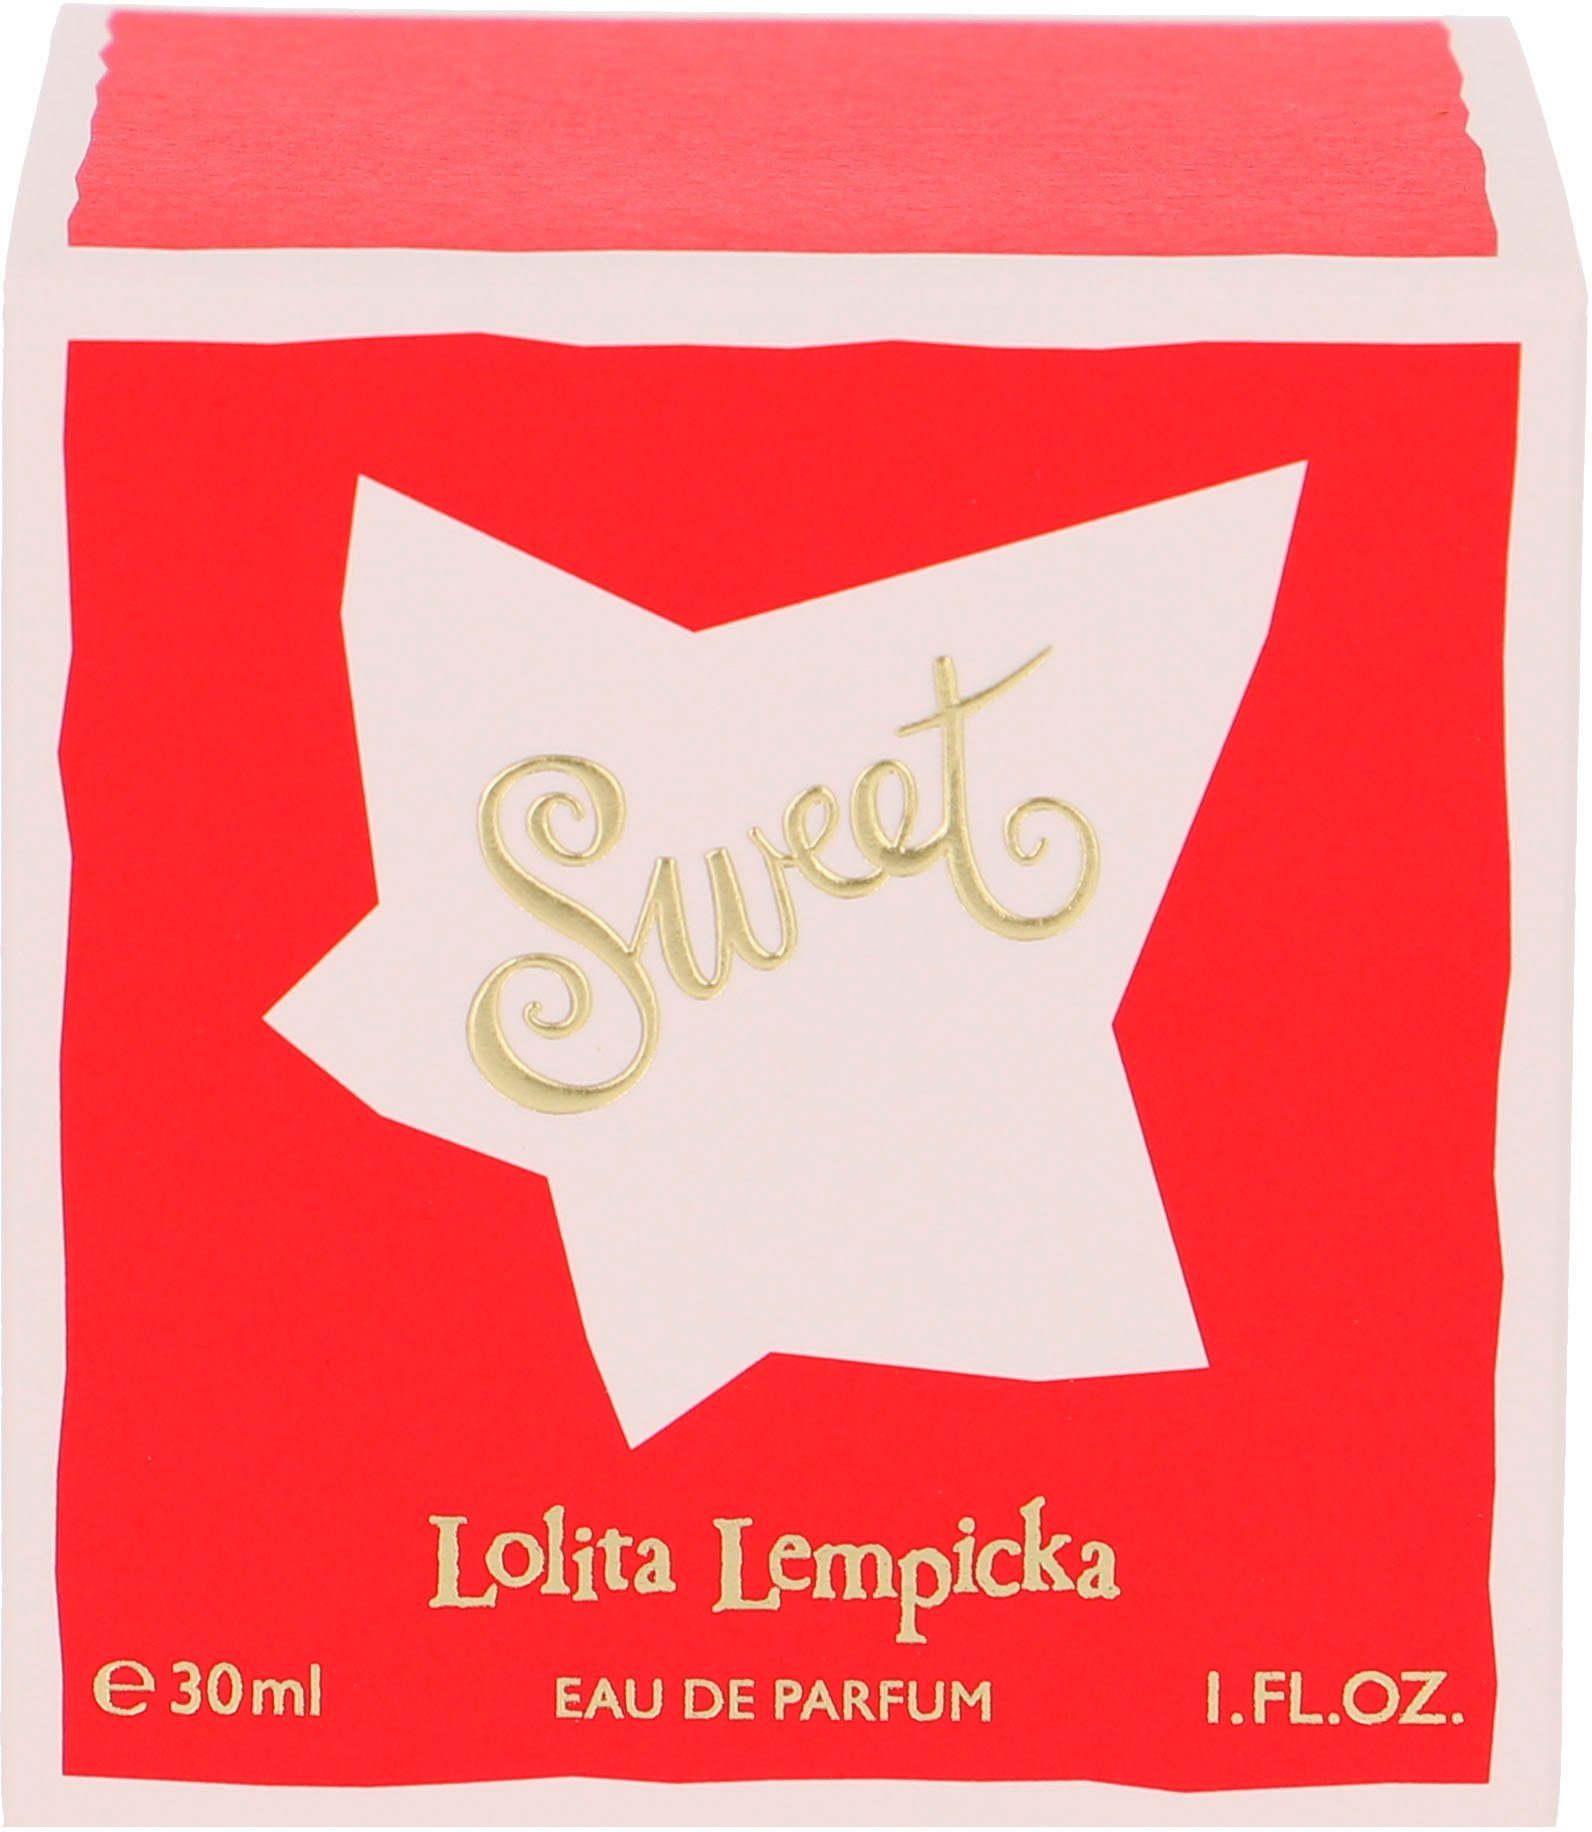 Lolita Lempicka Eau de Parfum Sweet Lempicka Lolita